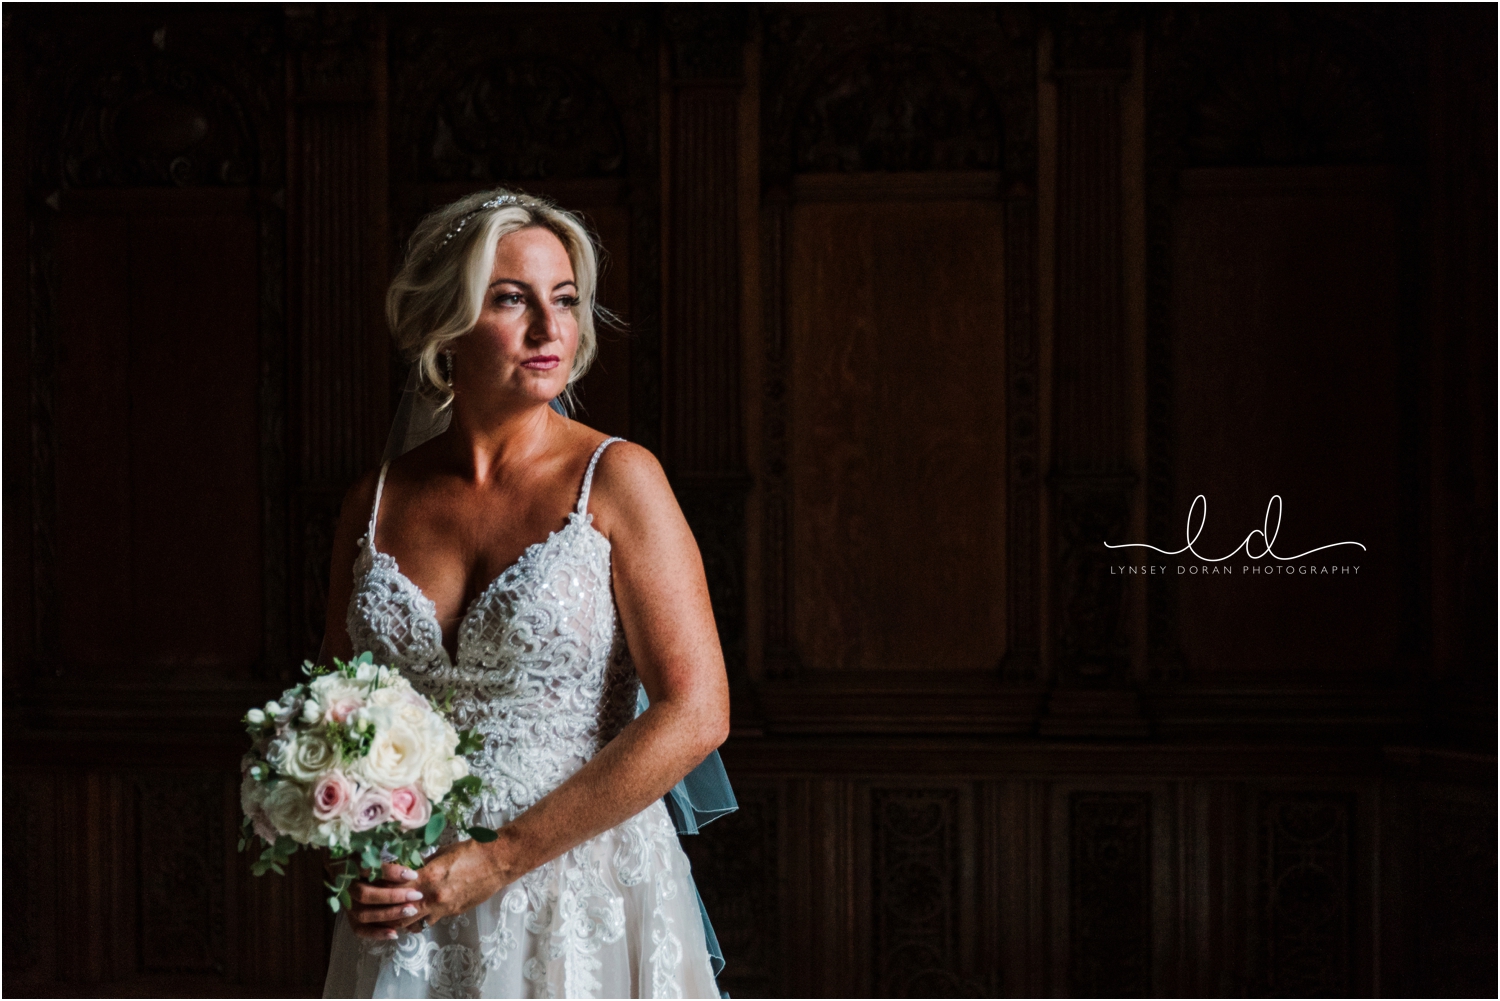 Hazlewood Castle Wedding Photography Leeds